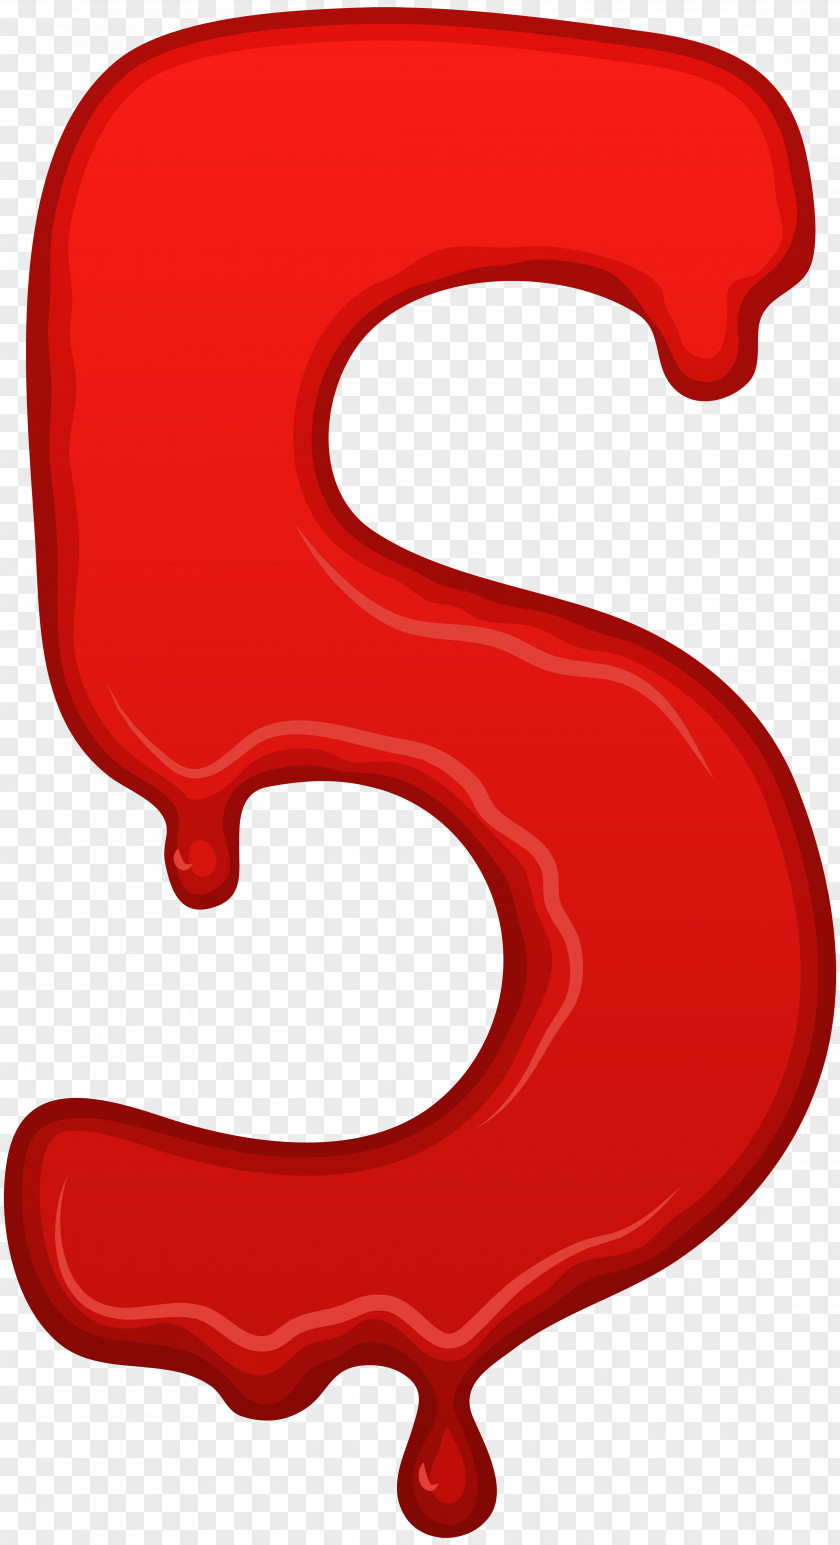 Bloody Number Five Clip Art Image Numerical Digit Decimal Numeral System Symbol PNG